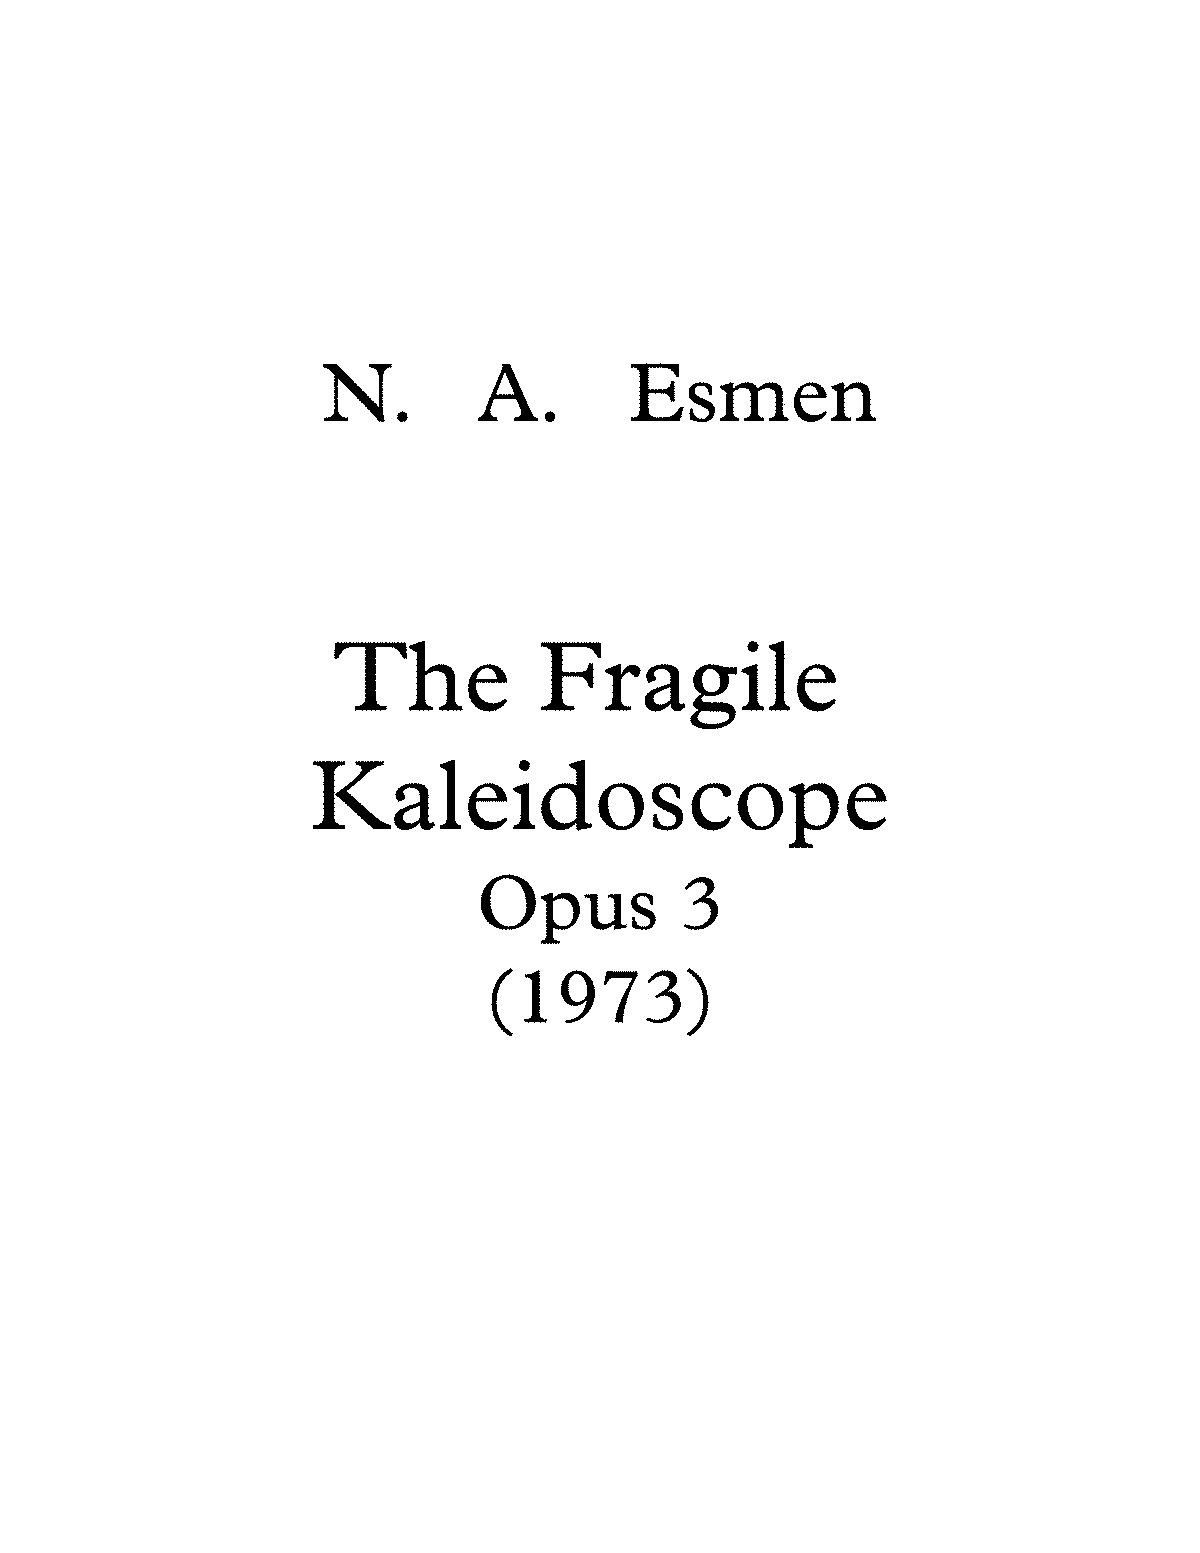 hiromi kaleidoscope sheet music